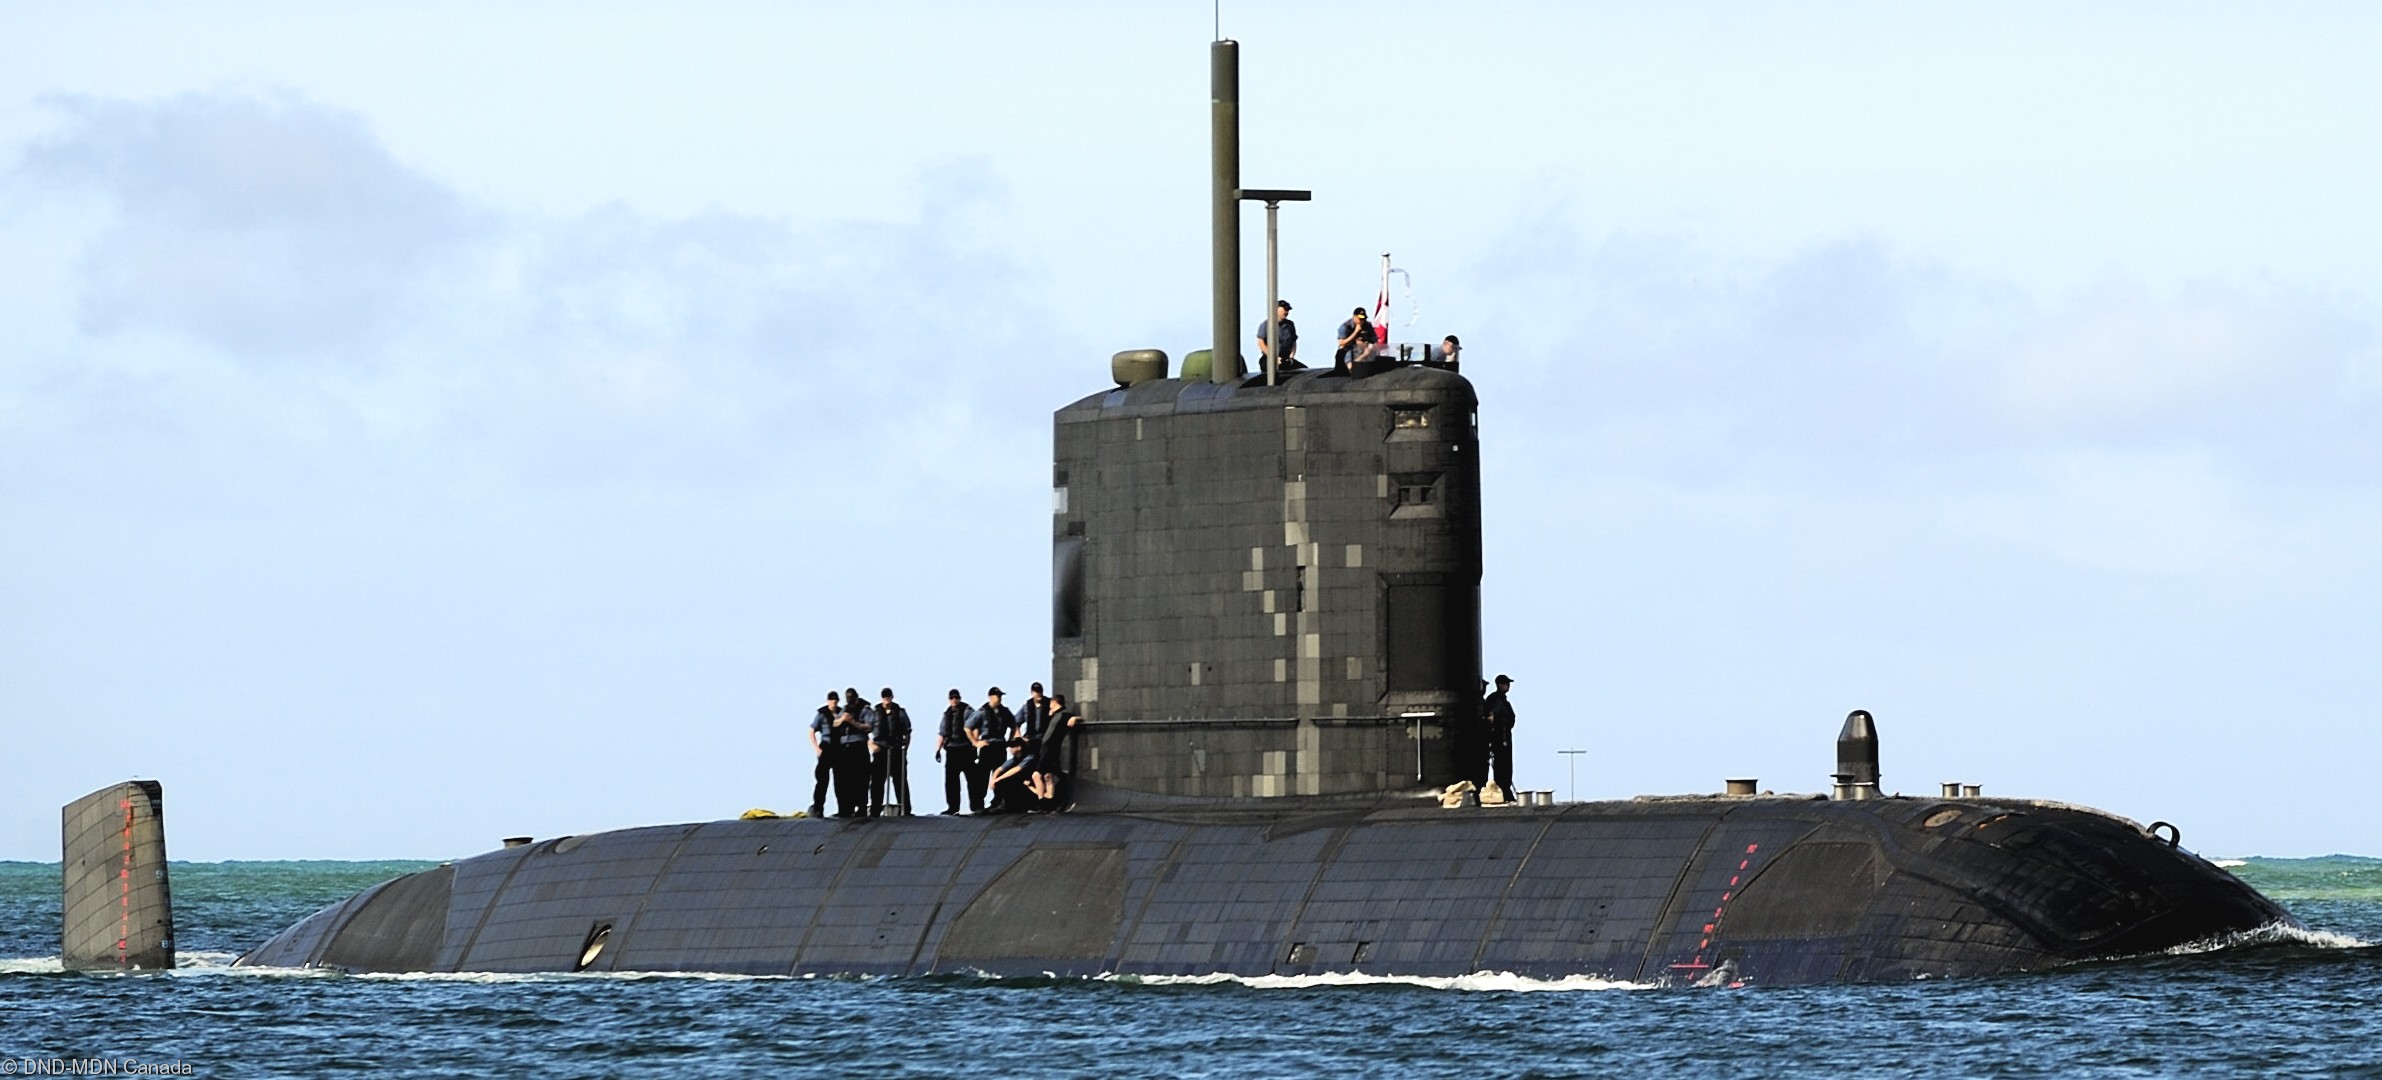 ssk-876 hmcs victoria upholder class attack submarine hunter killer ncsm royal canadian navy 35